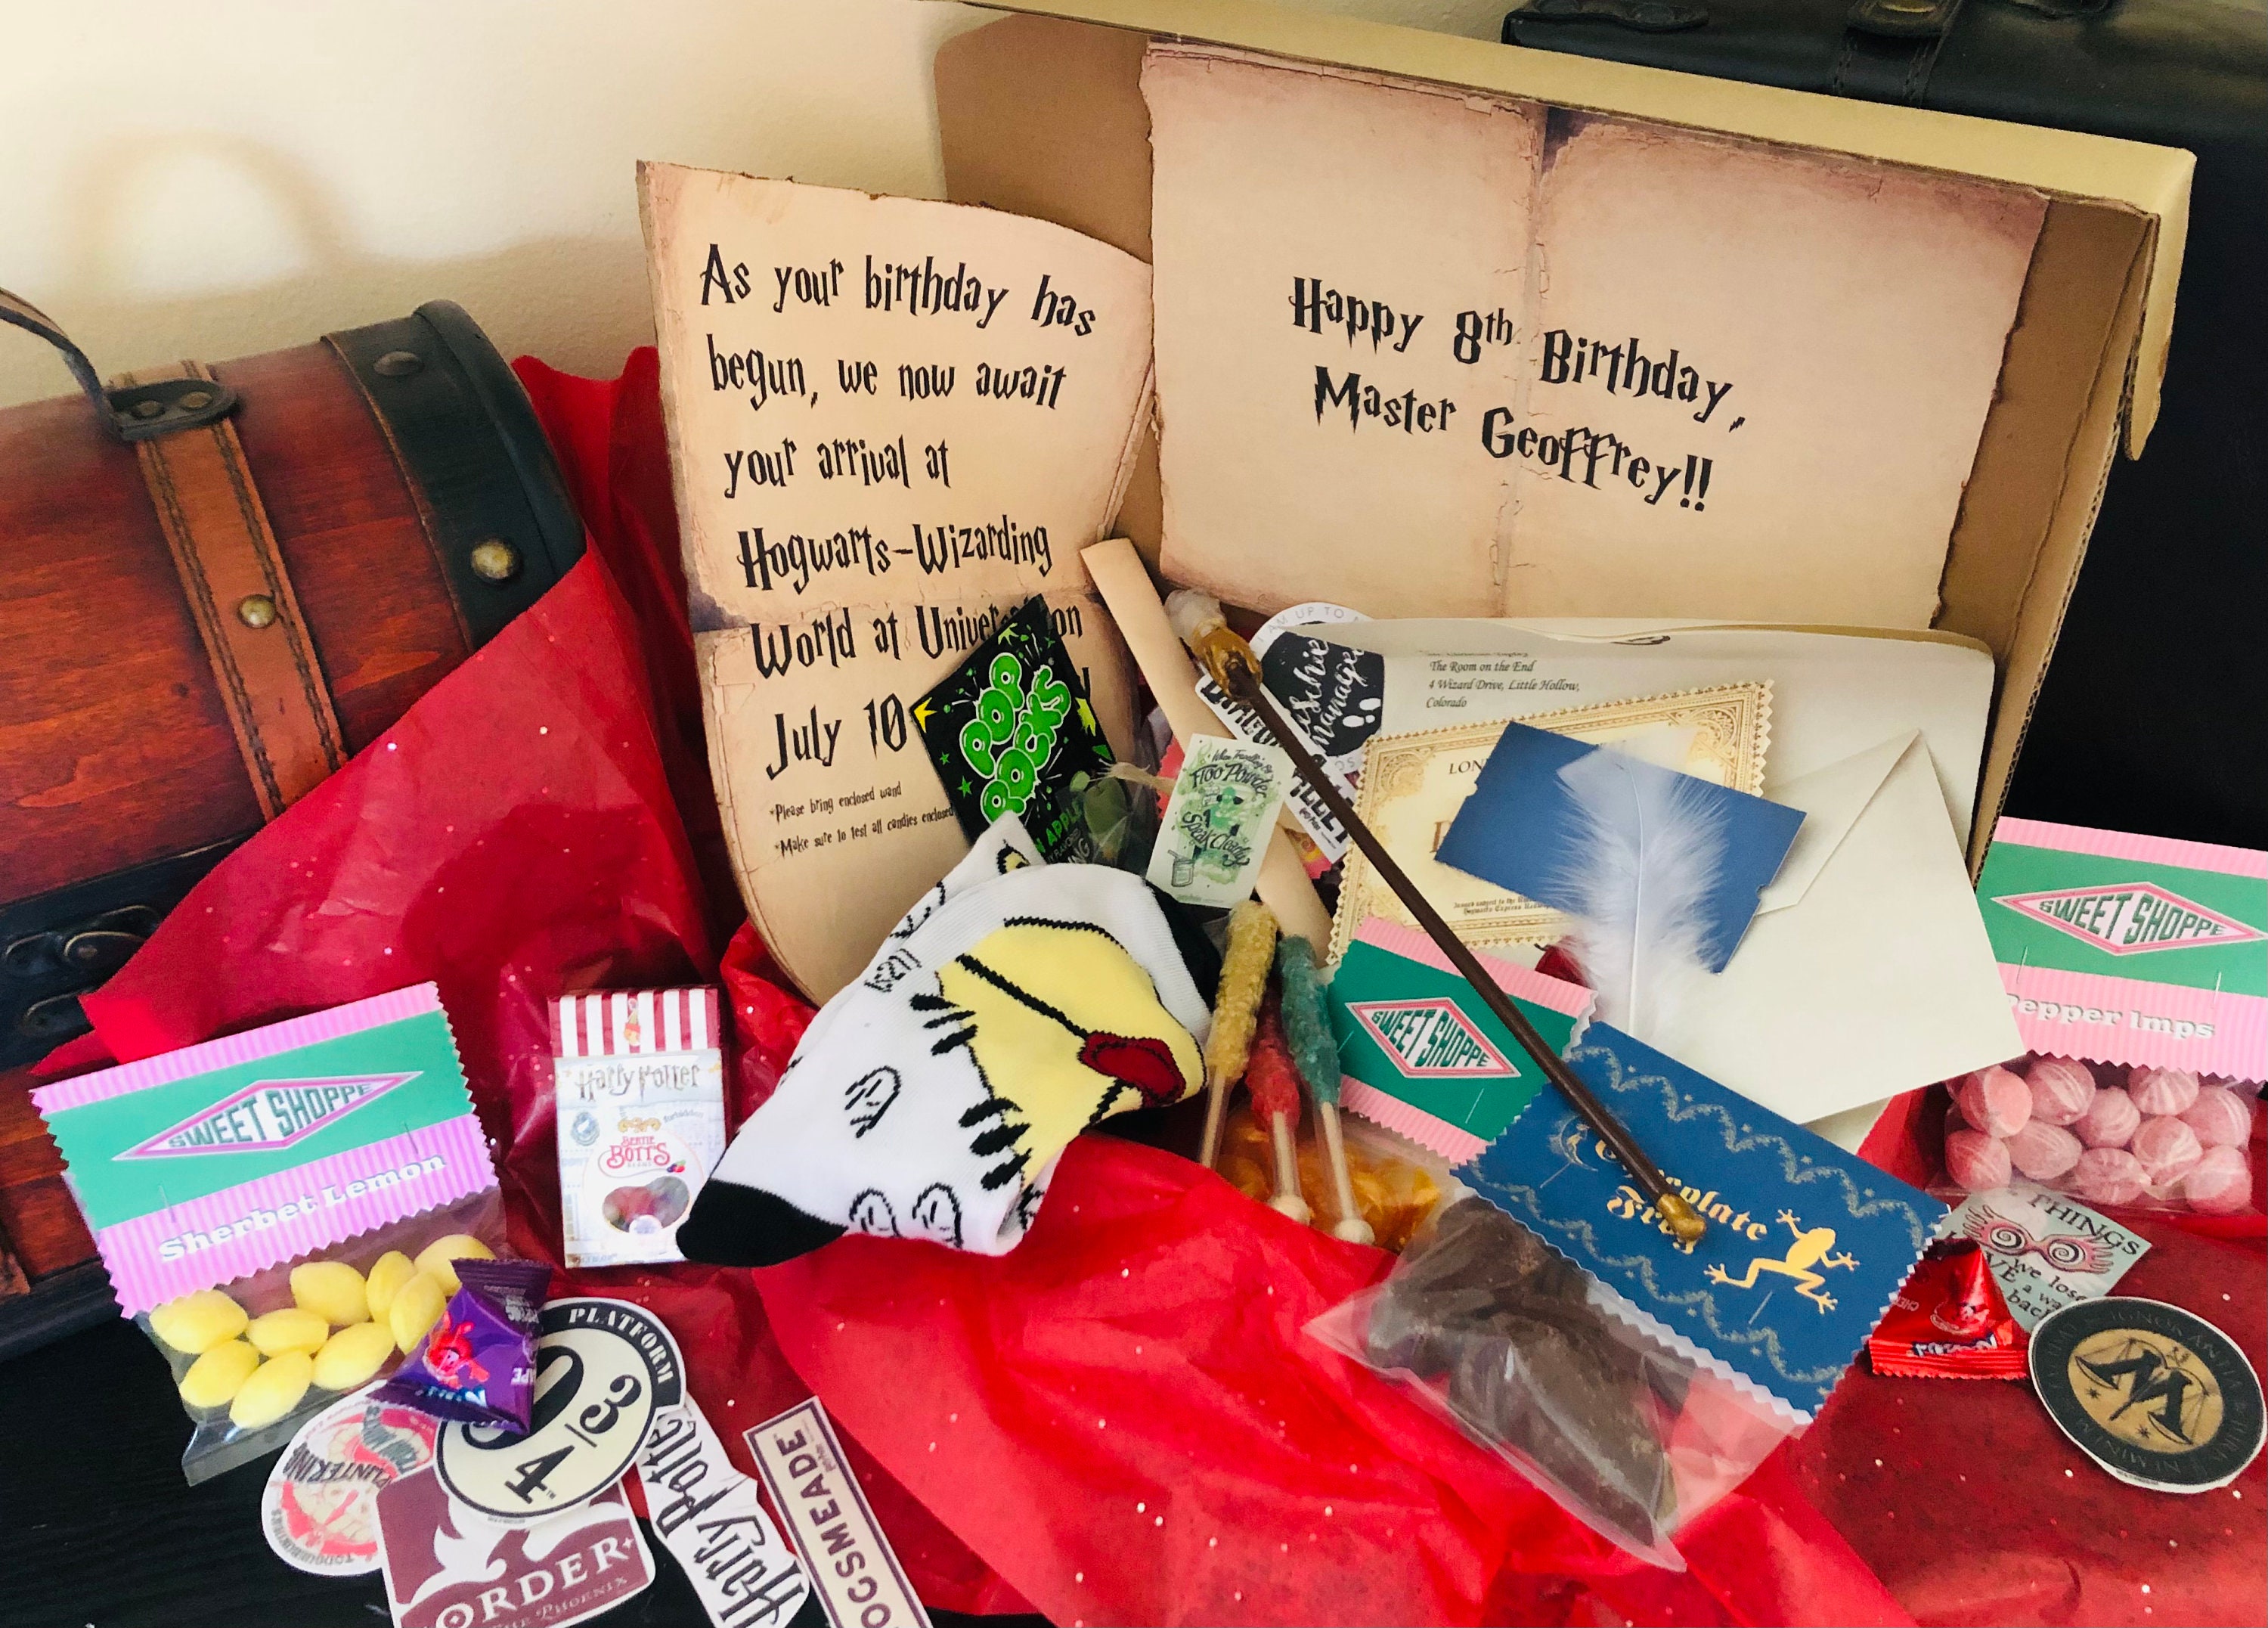 Harry Potter Gift Harry Potter Gift Box Harry Potter Snack Box Harry Potter  Care Package Harry Pottery Gift for Women Wizard Gift 